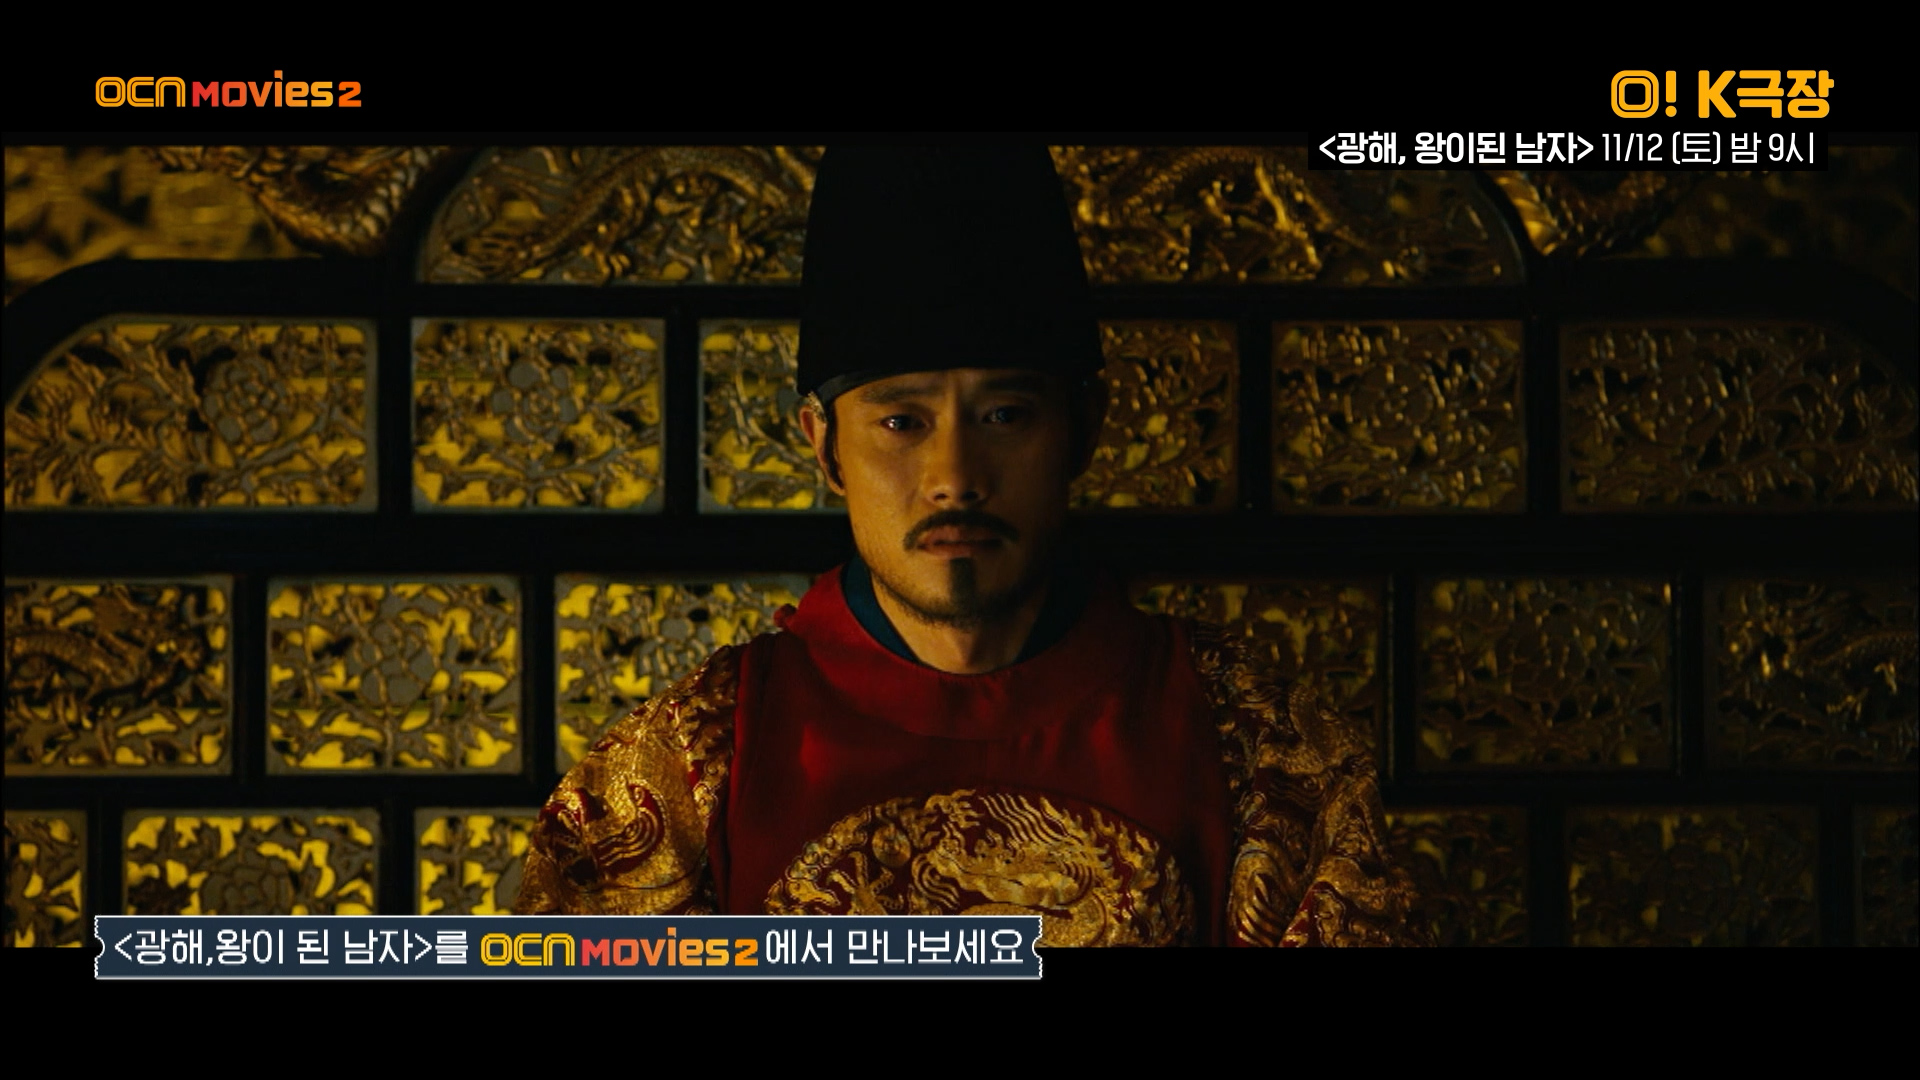 OCN Movies2 I [O! K극장] #광해왕이된남자 11/12 (토) 밤 9시